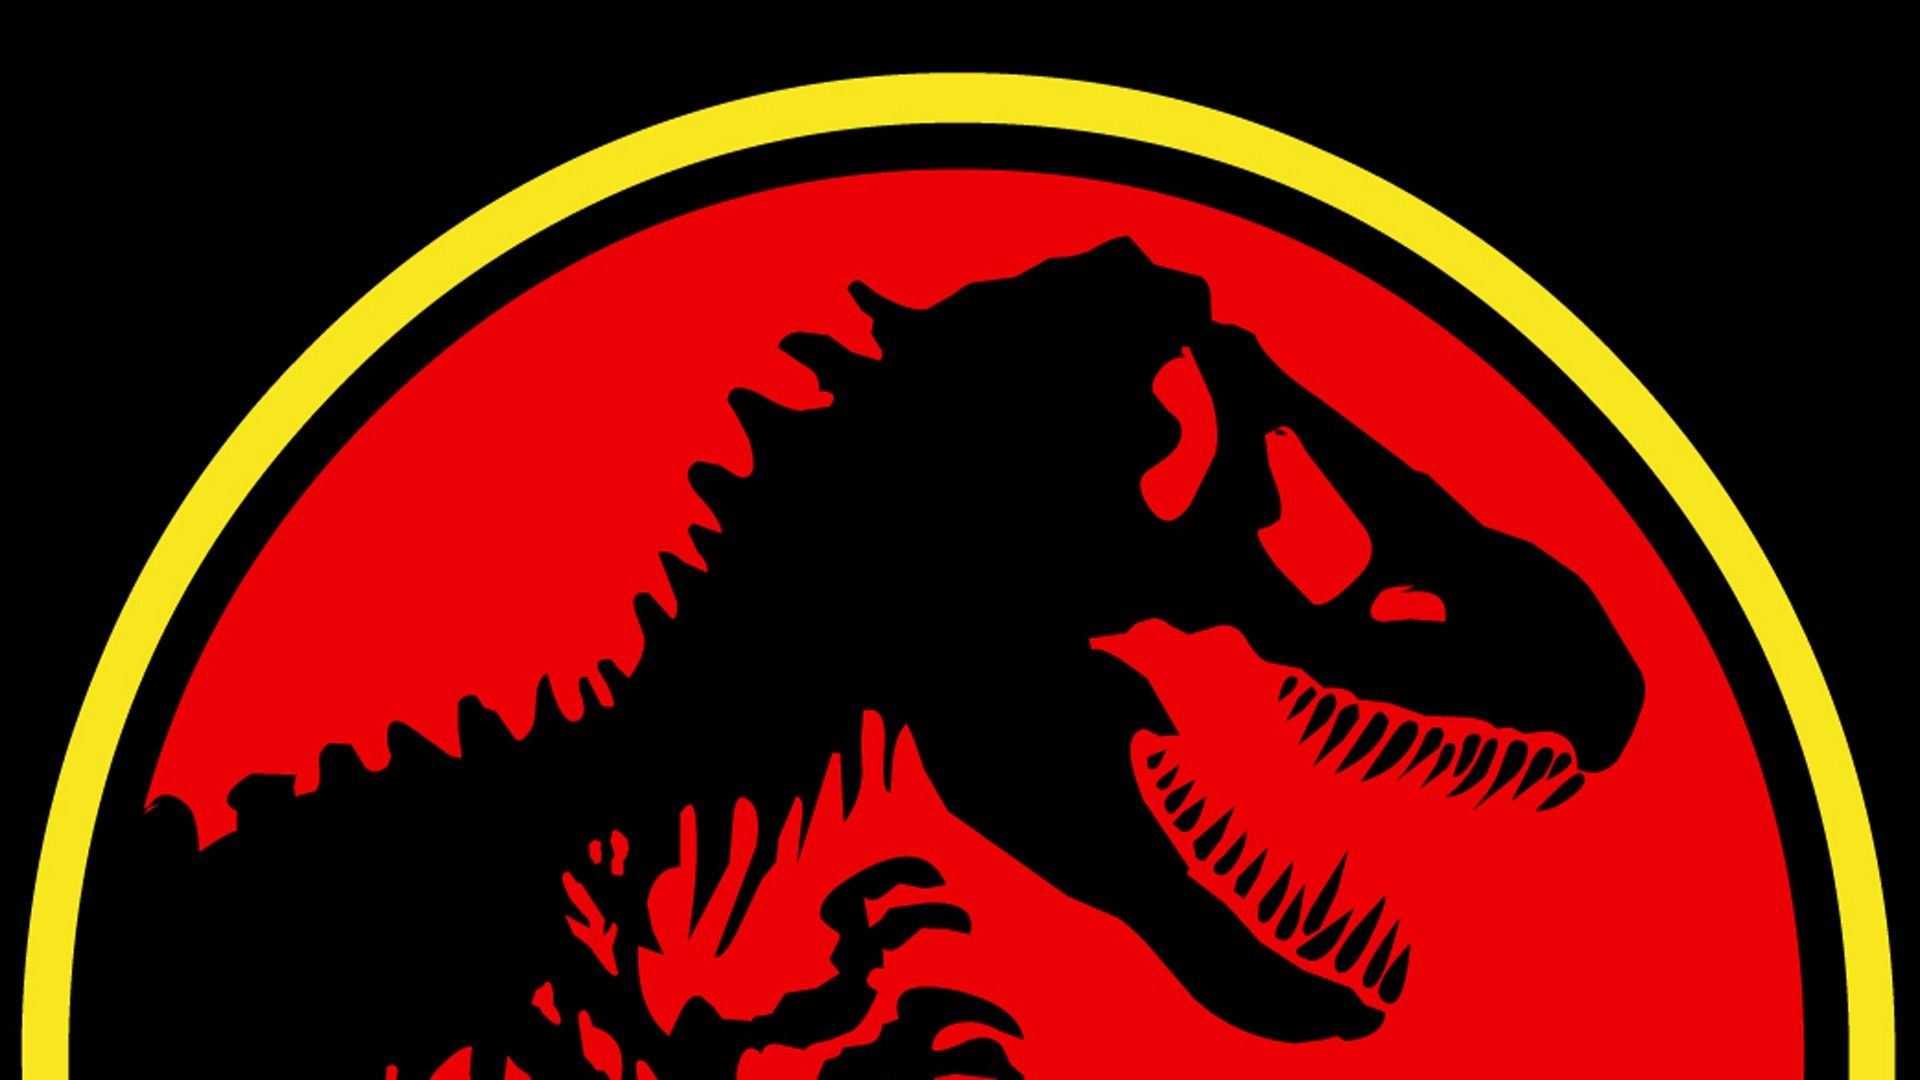 Jurassic Park iPhone Wallpaper